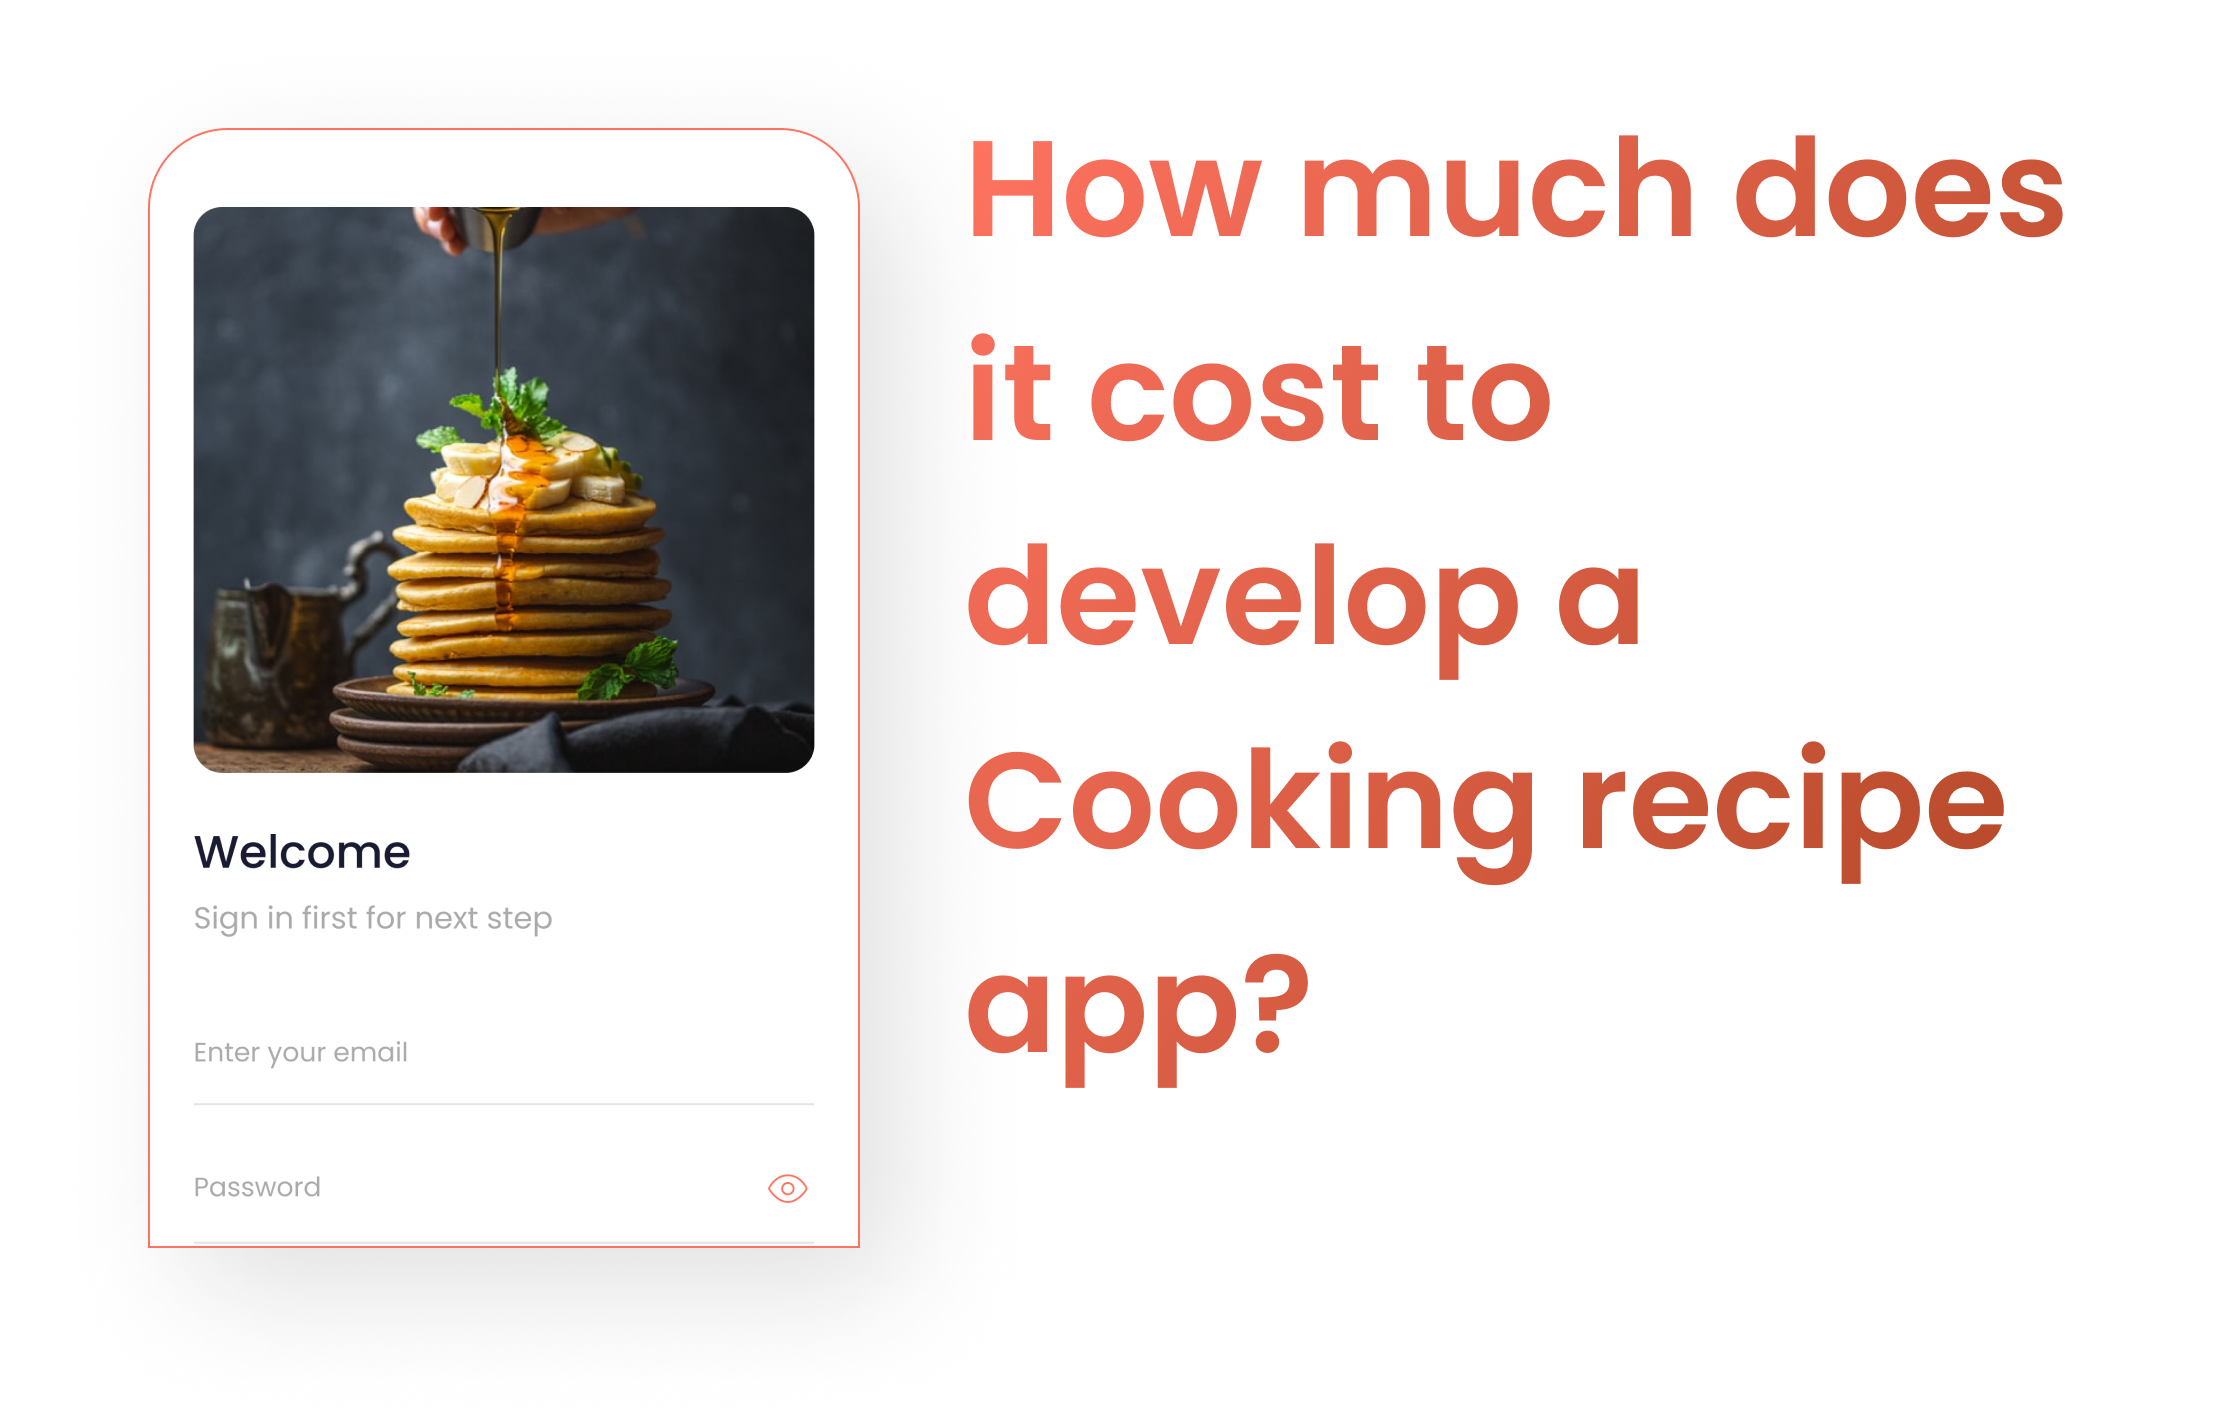 Cooking Reciep App Development - The App Ideas